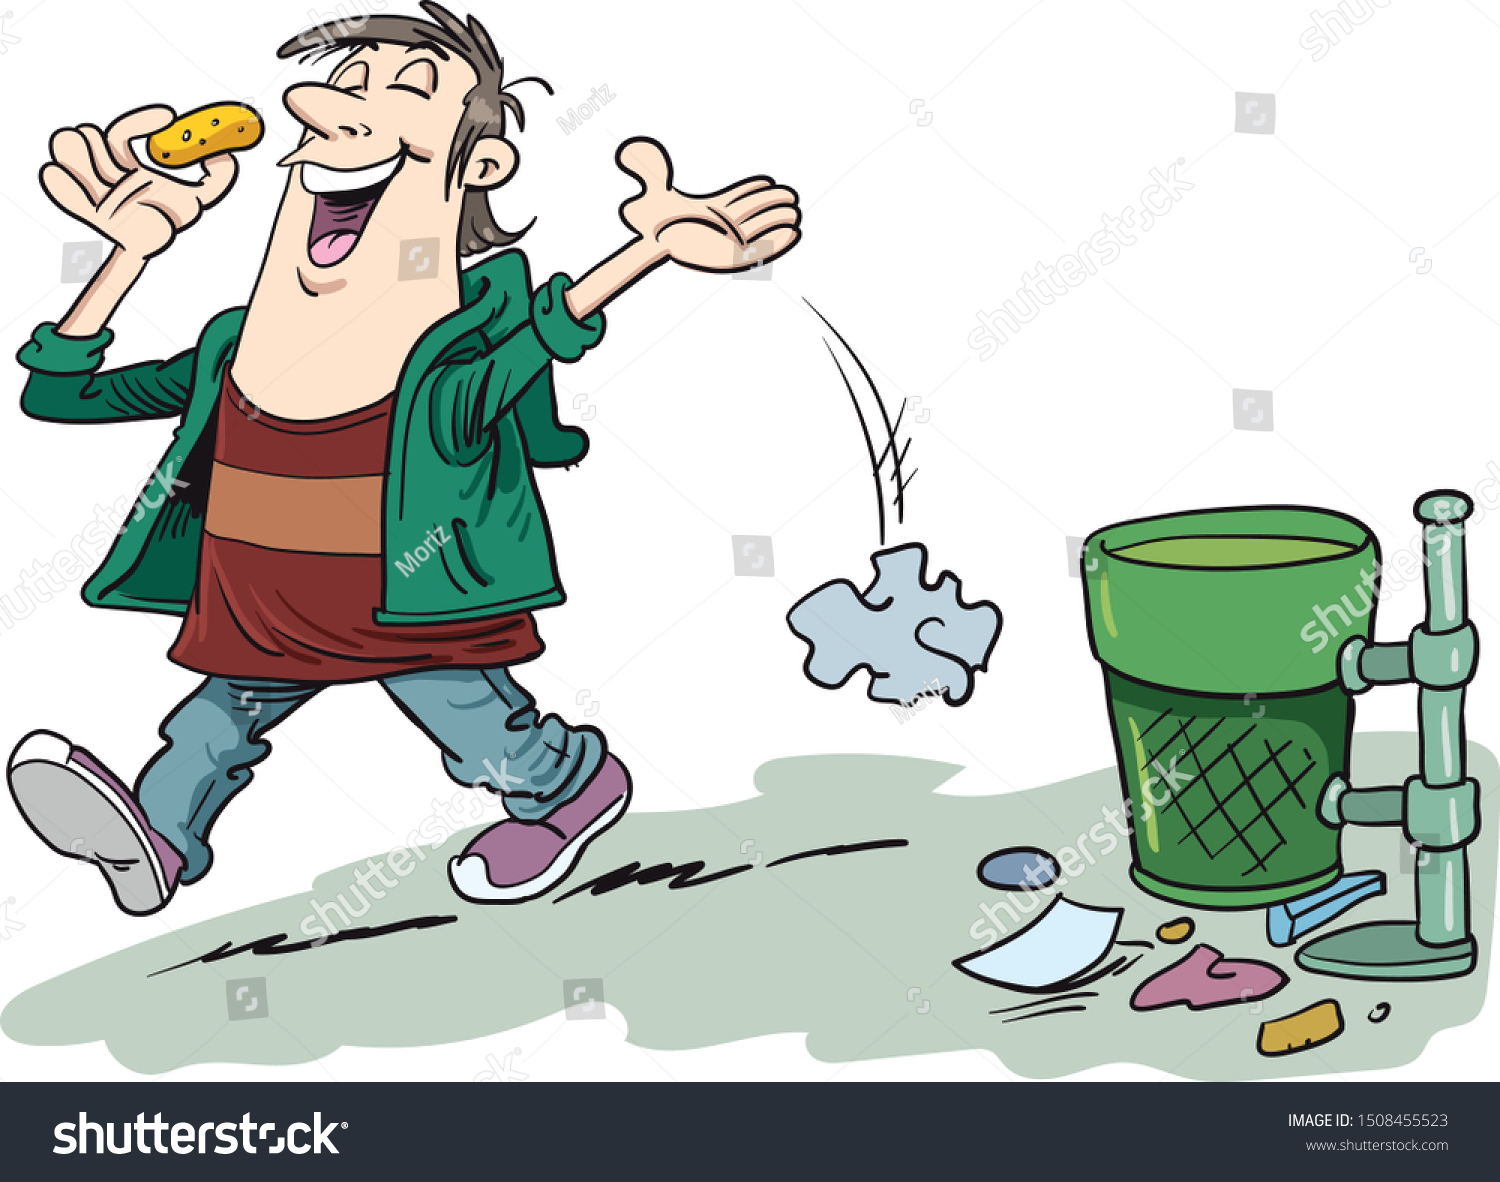 5,654 Throw trash cartoon Images, Stock Photos & Vectors Shutterstock